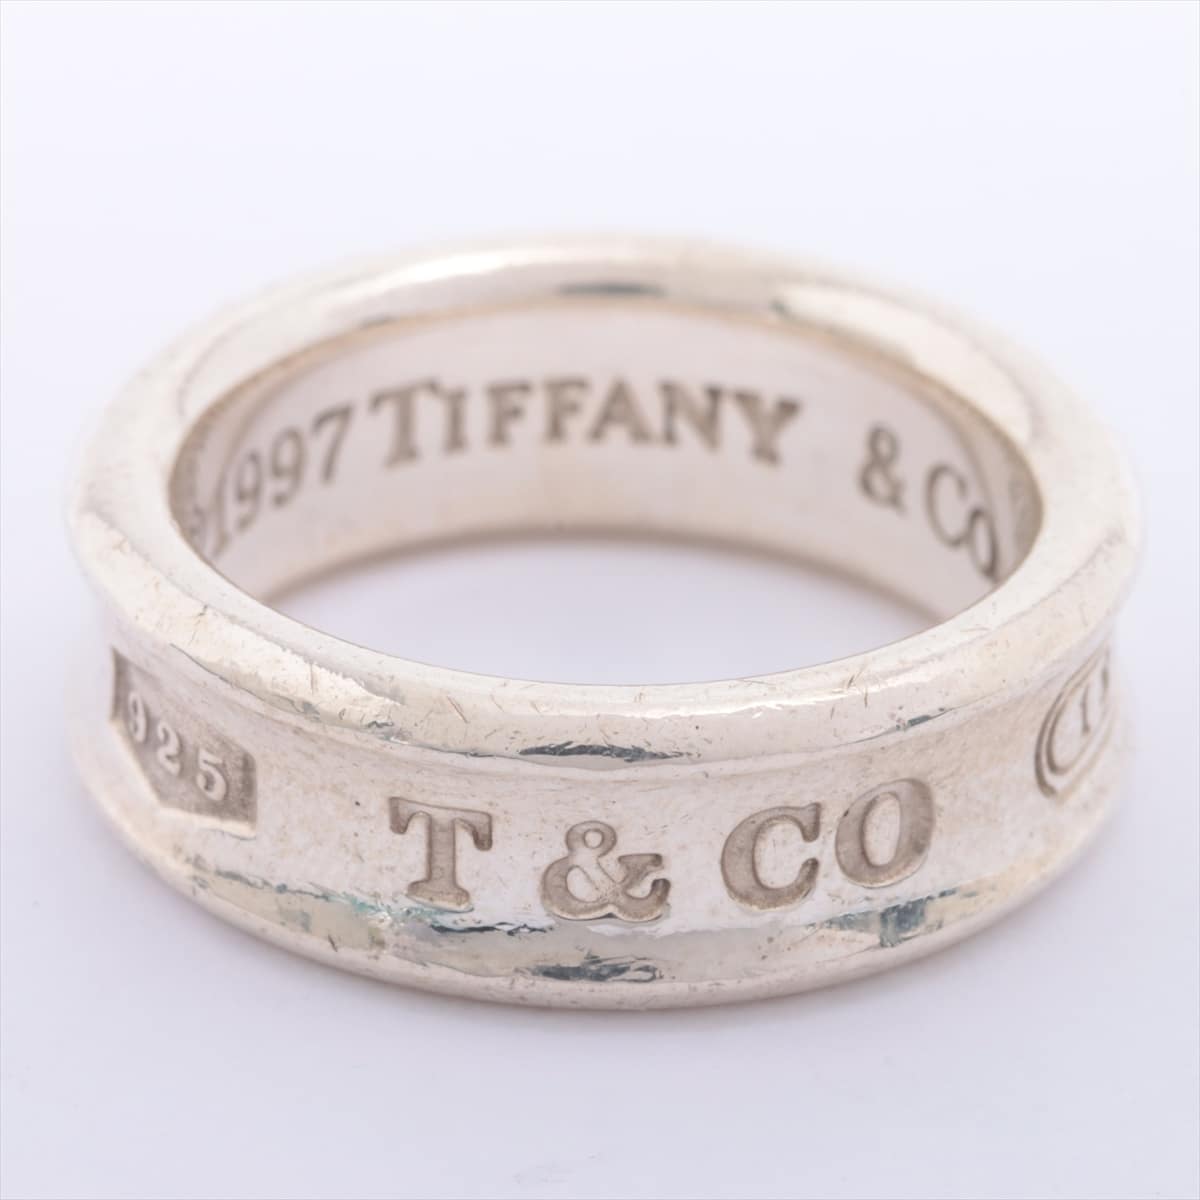 Tiffany 1837 Narrow rings 925 8.7g Silver